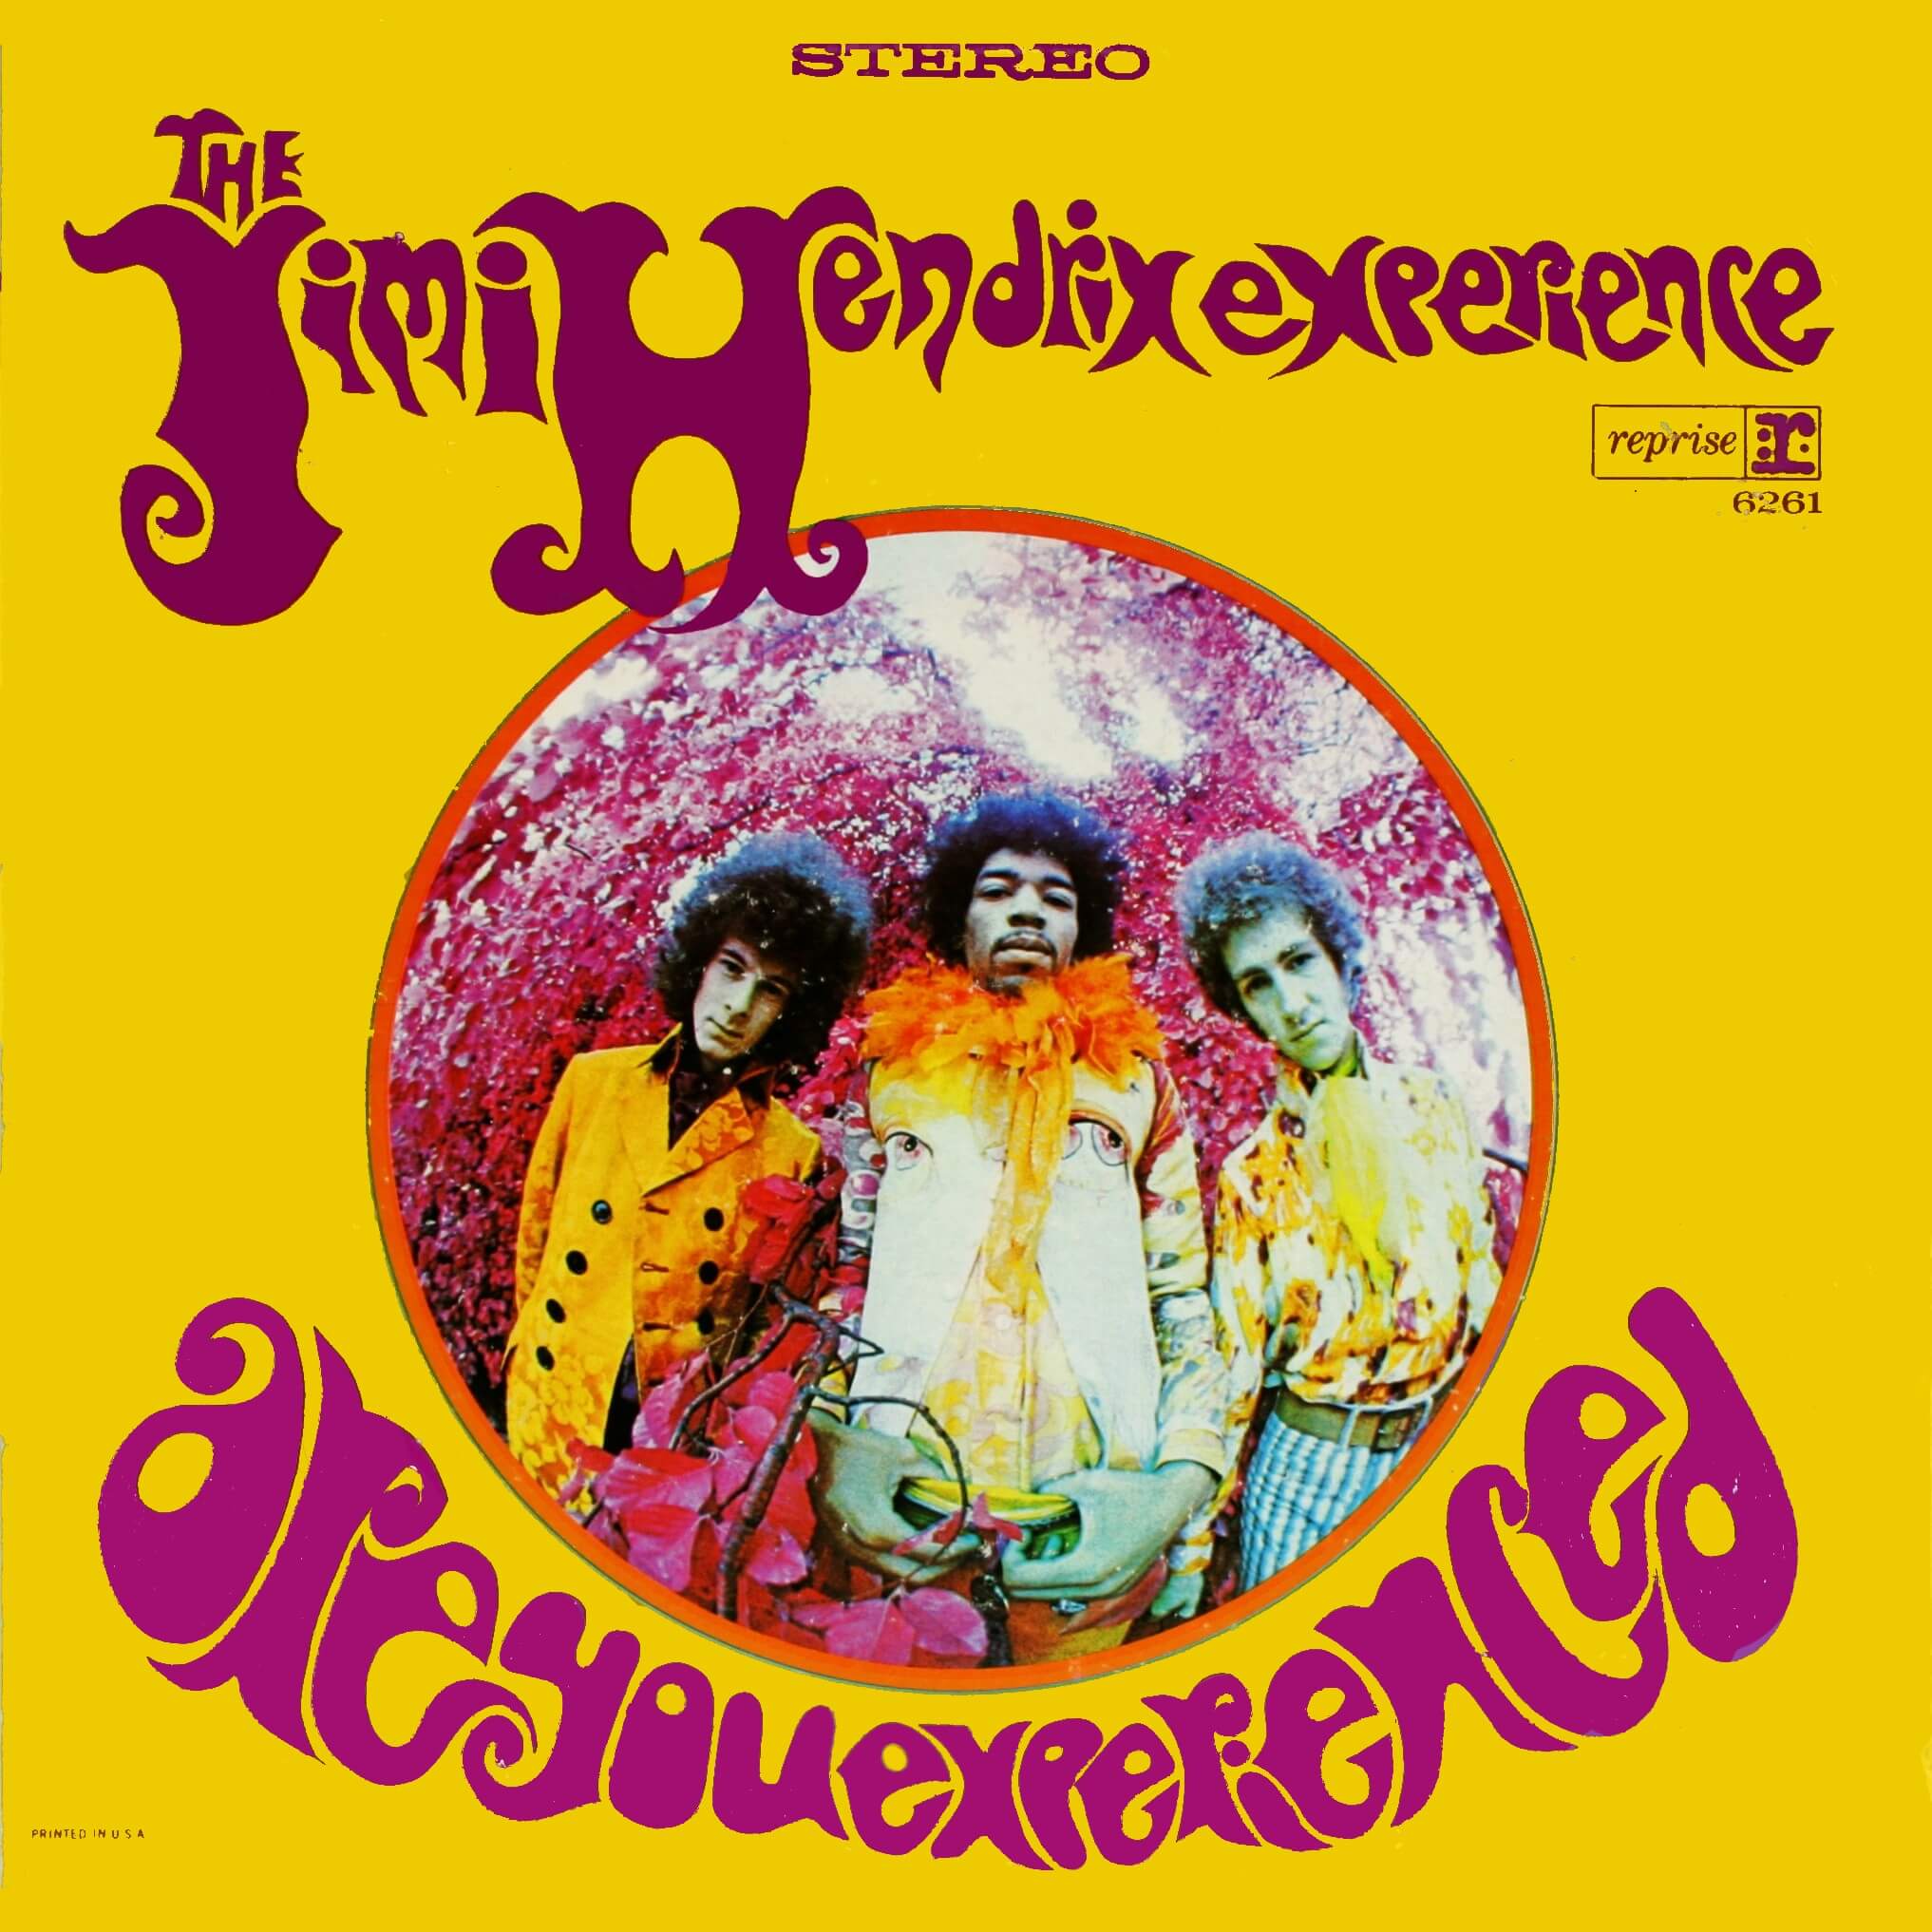 Jimi Hendrix Experience - Are You Experienced album